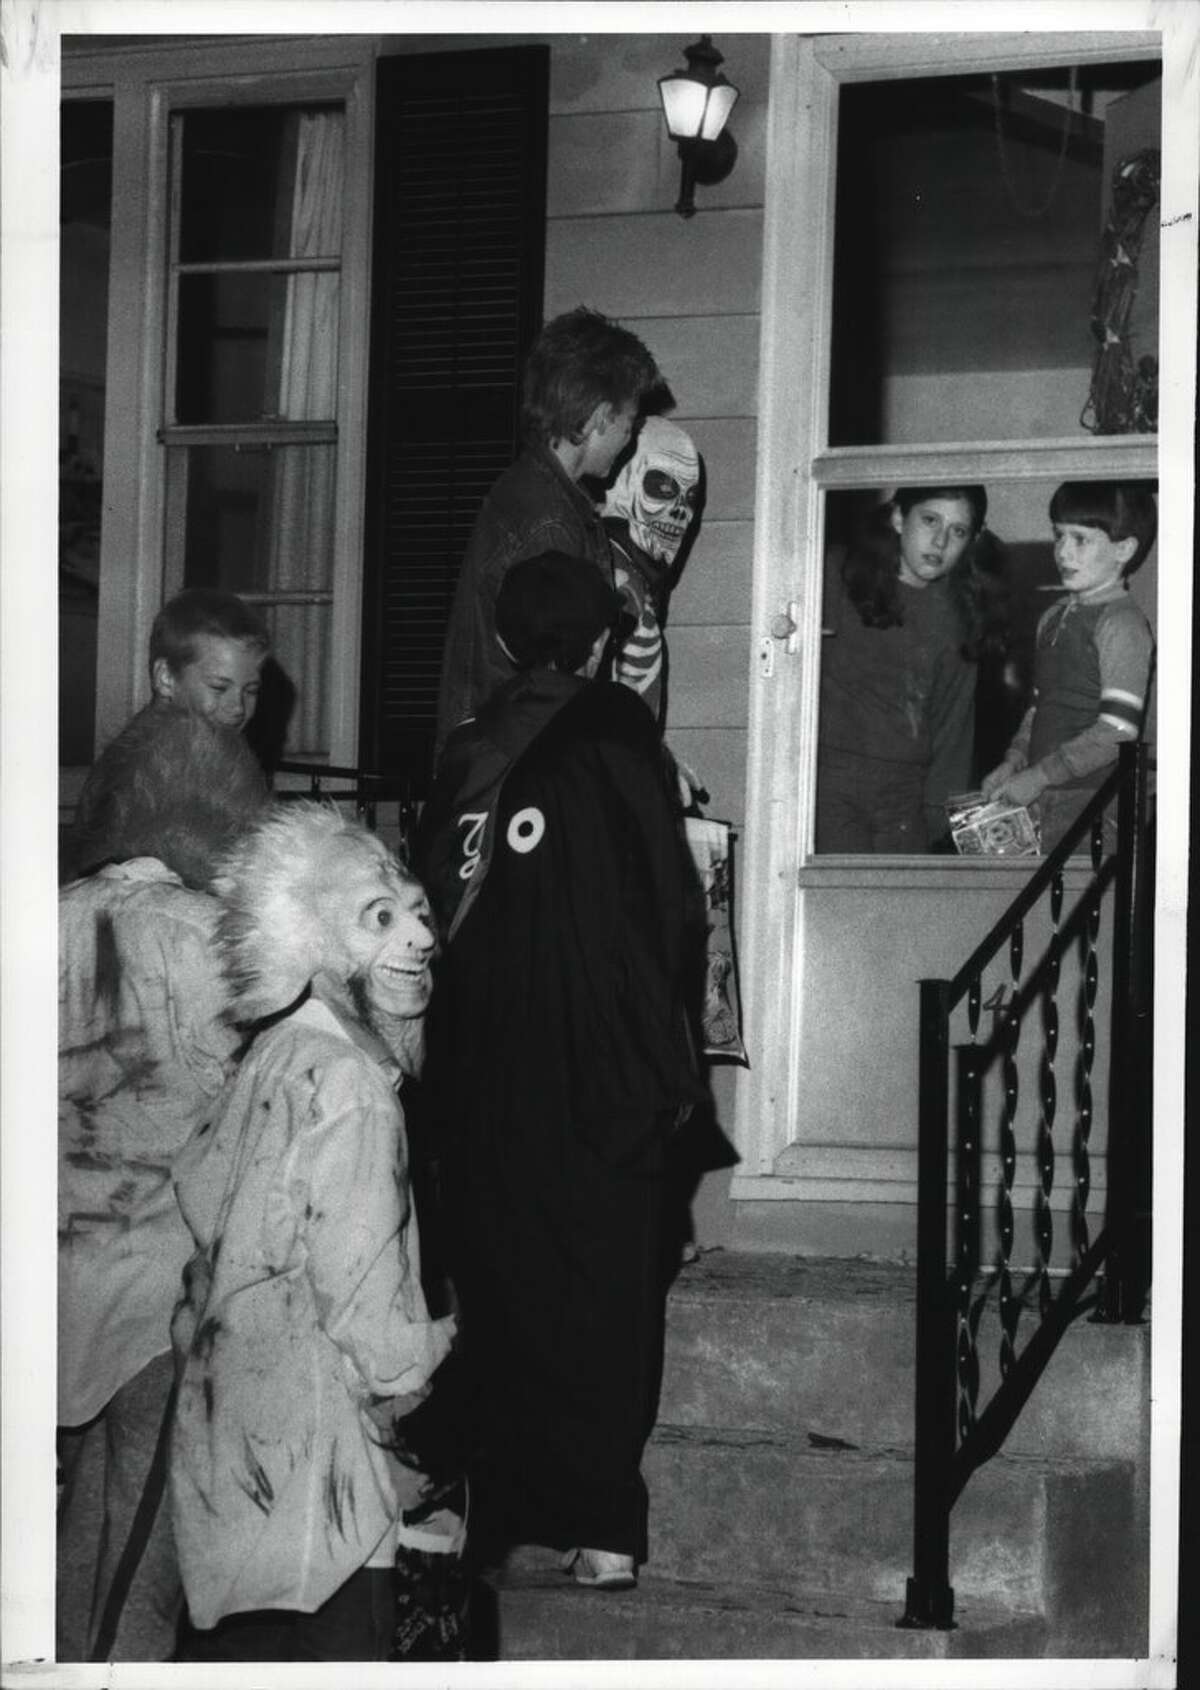 Oct. 31, 1987 Kids trick or treat in costume near Shaker High School in Colonie.